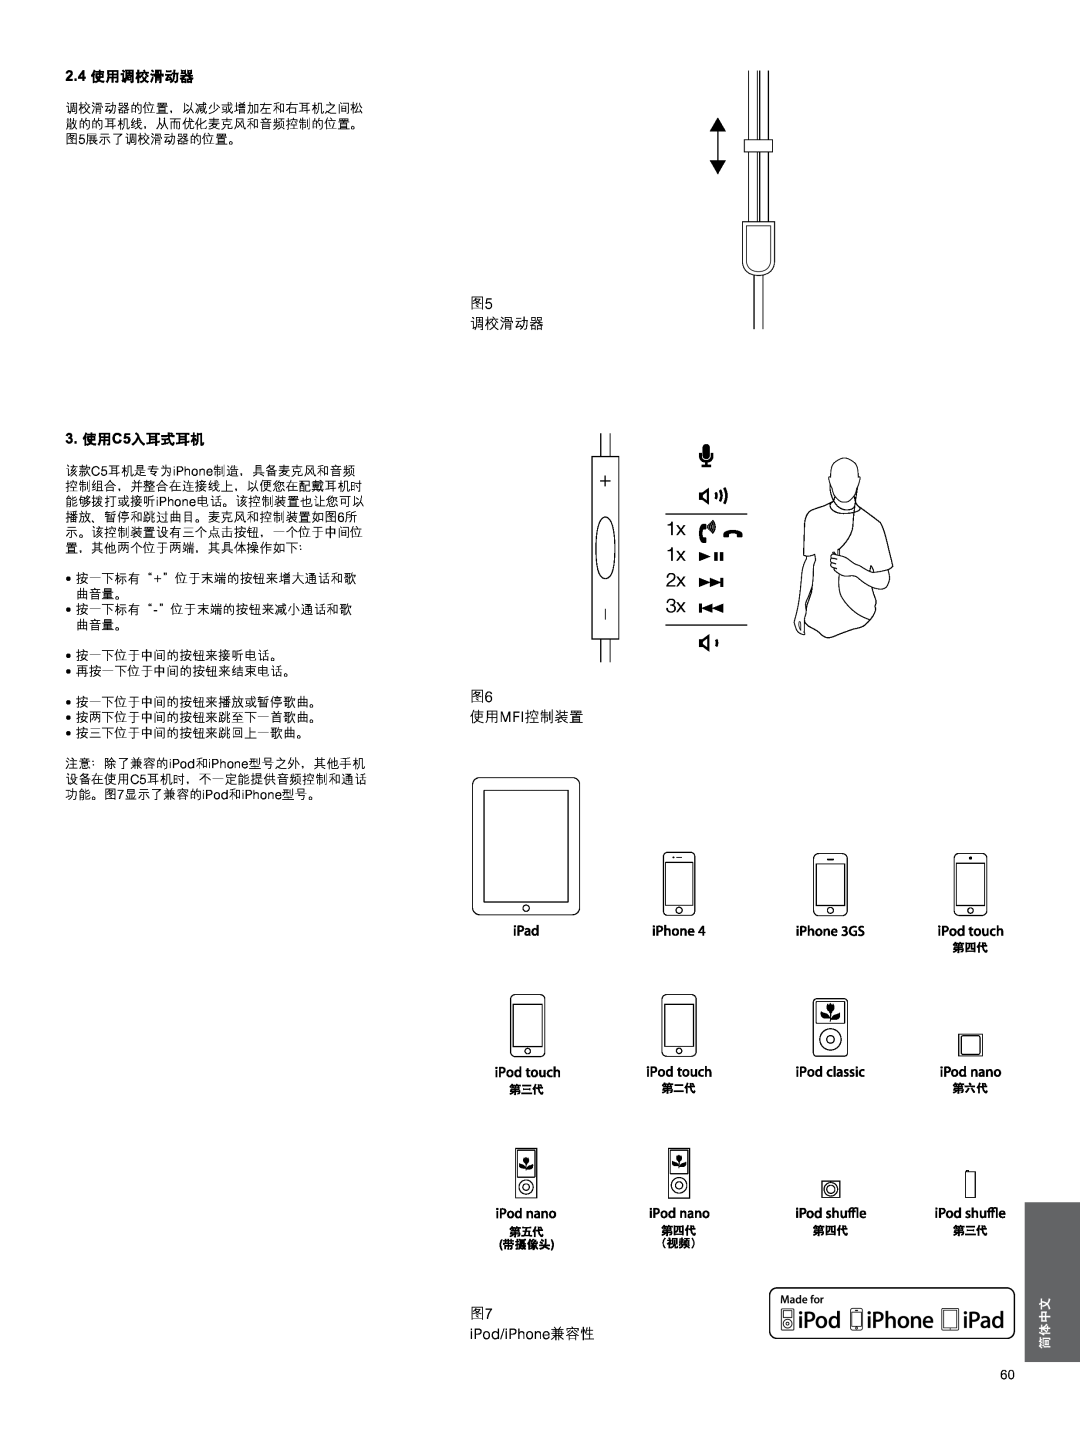 Bowers & Wilkins manual 1x, 2.4使用调校滑动器, 3.使用C5入耳式耳机, 图5 调校滑动器, 图6 使用MFI控制装置, iPod/iPhone兼容性, 简体中文 